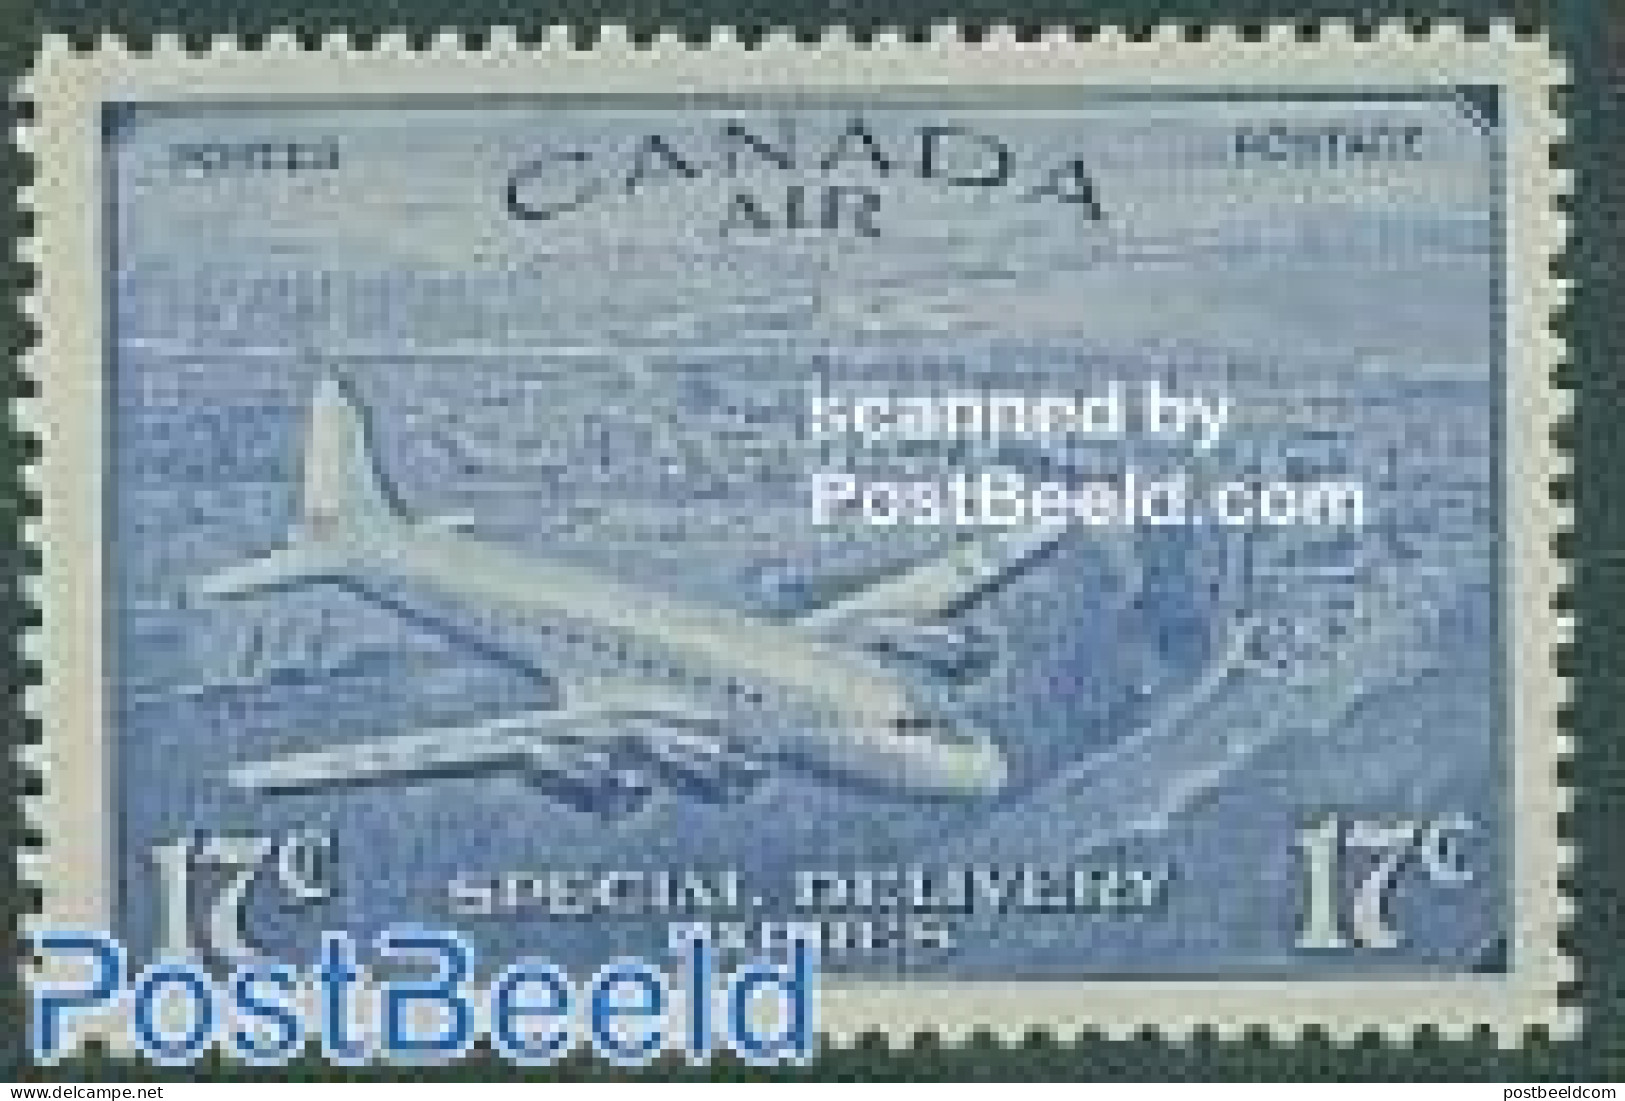 Canada 1946 Airmail Definitive 1v, Mint NH, Transport - Aircraft & Aviation - Neufs